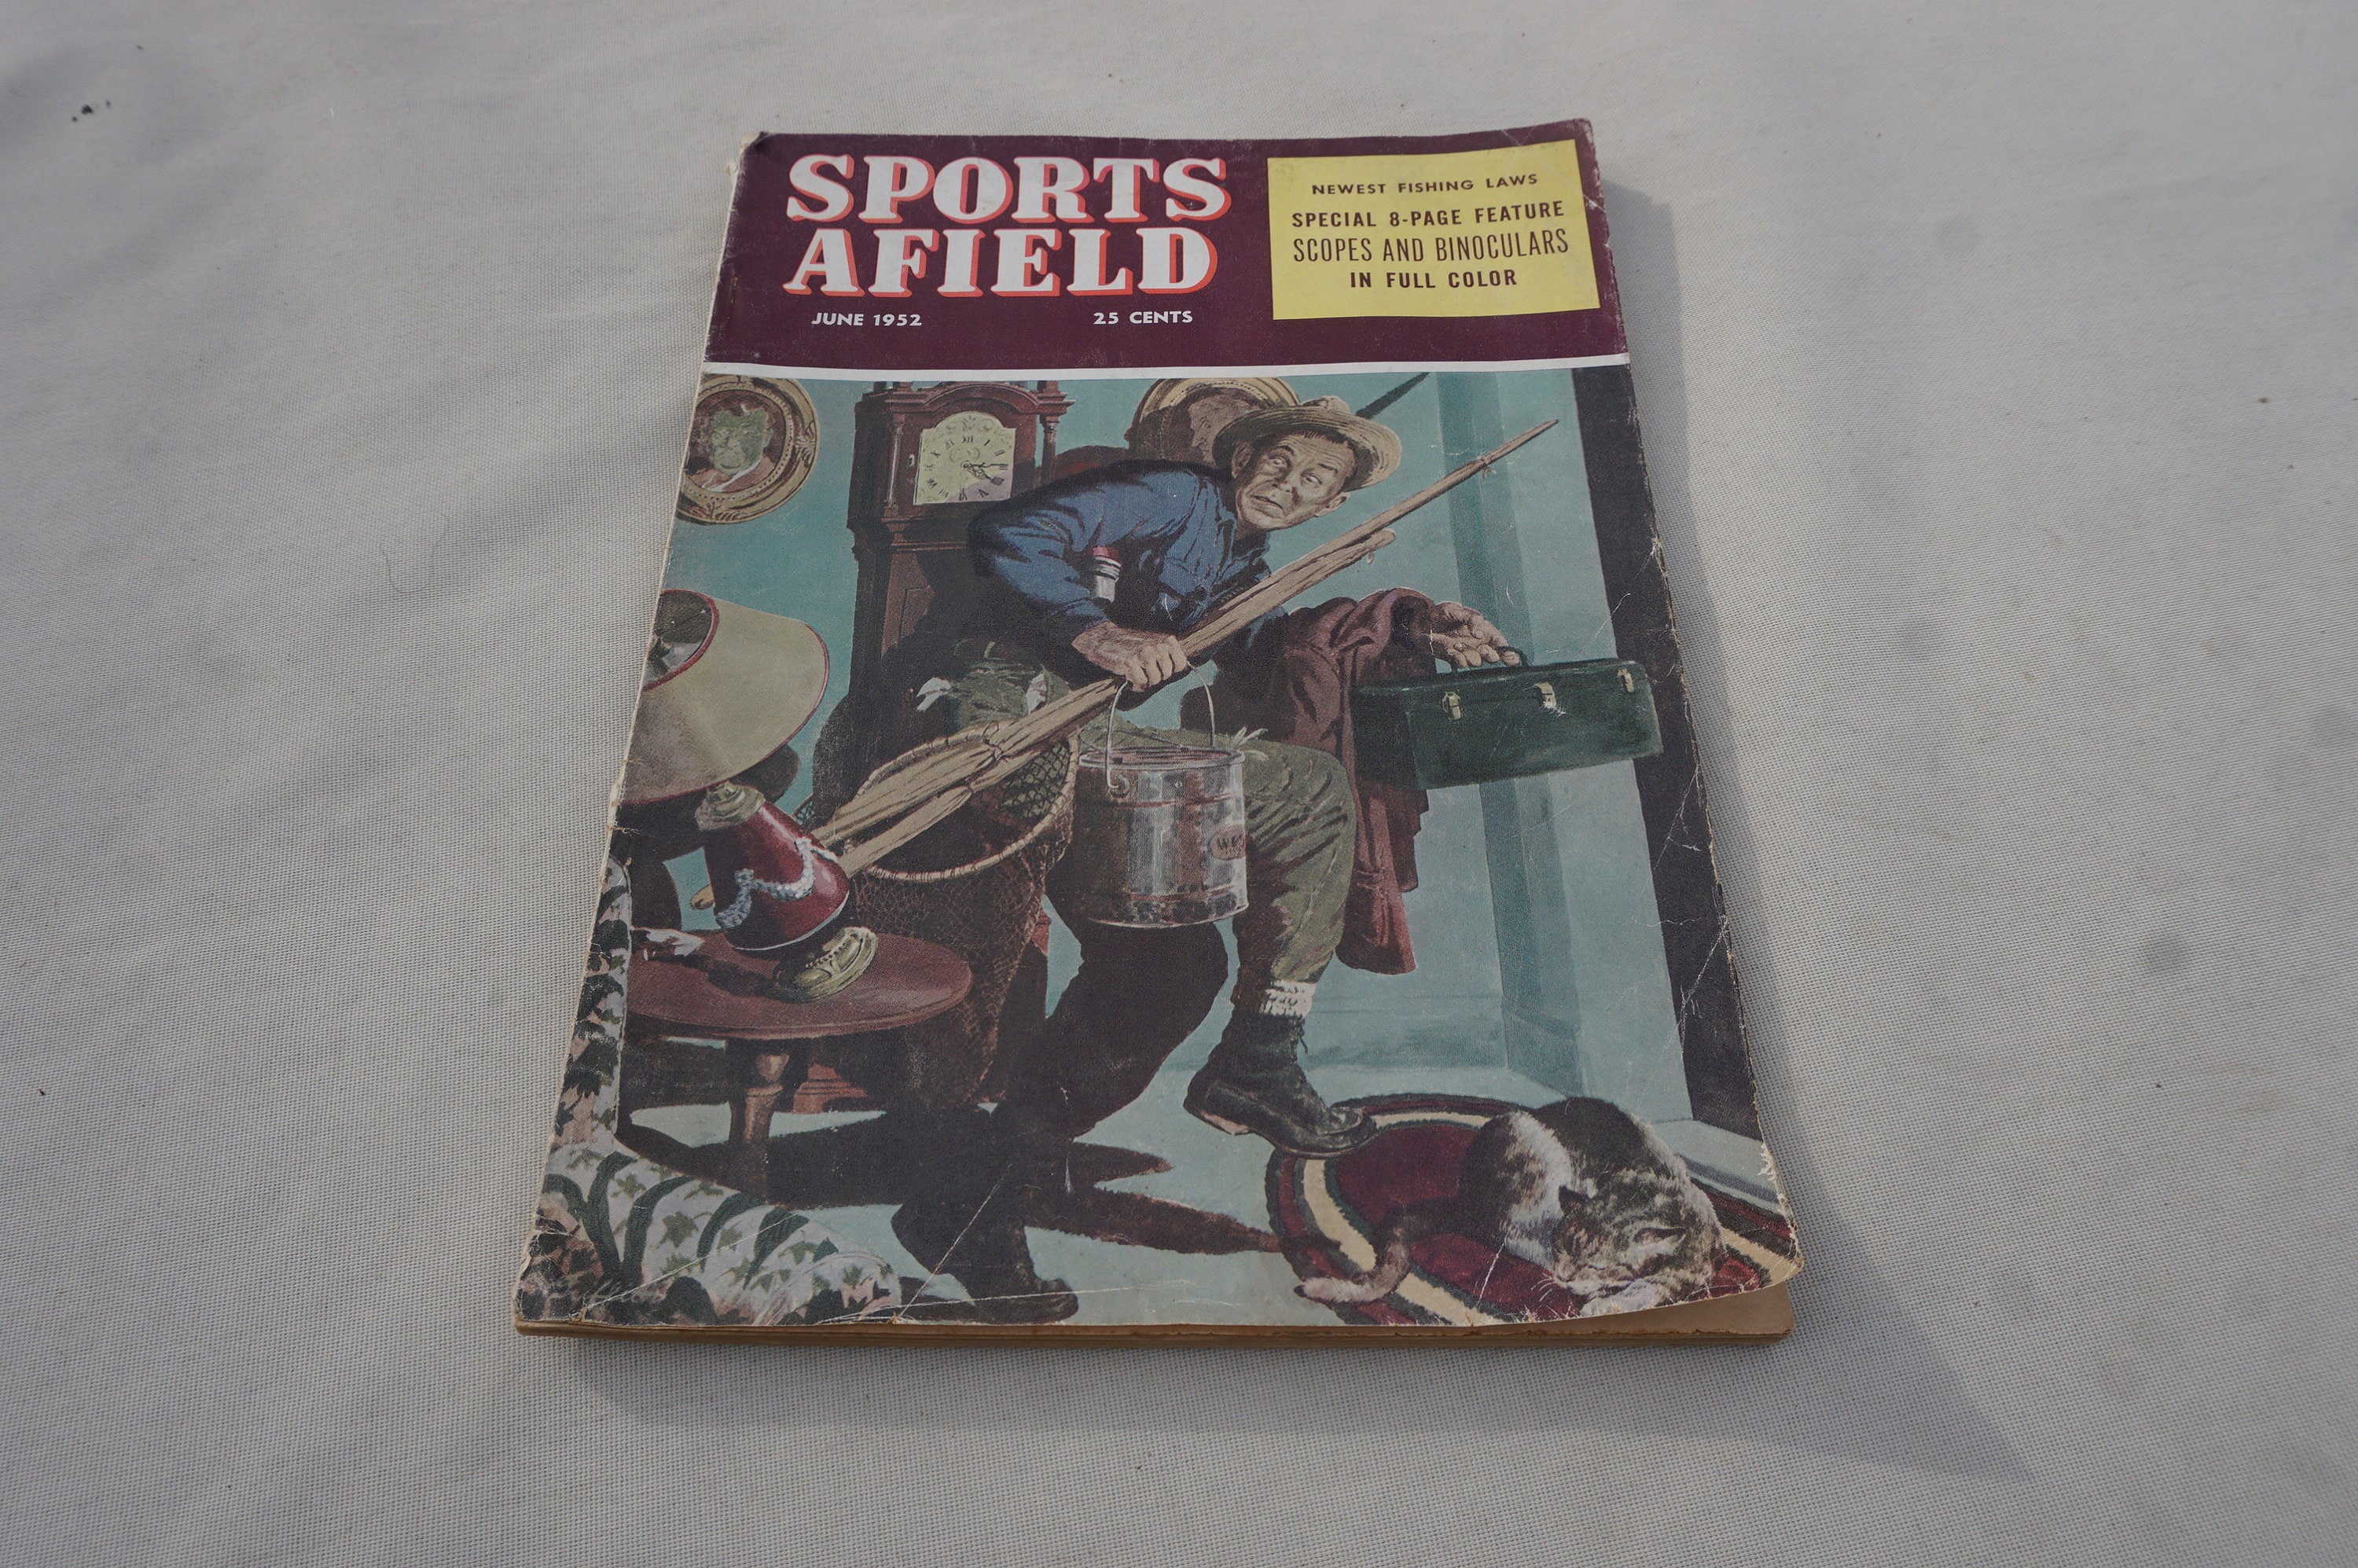 FINAL SALE Magazine Sports Afield June 1952 Newest Fishing Laws